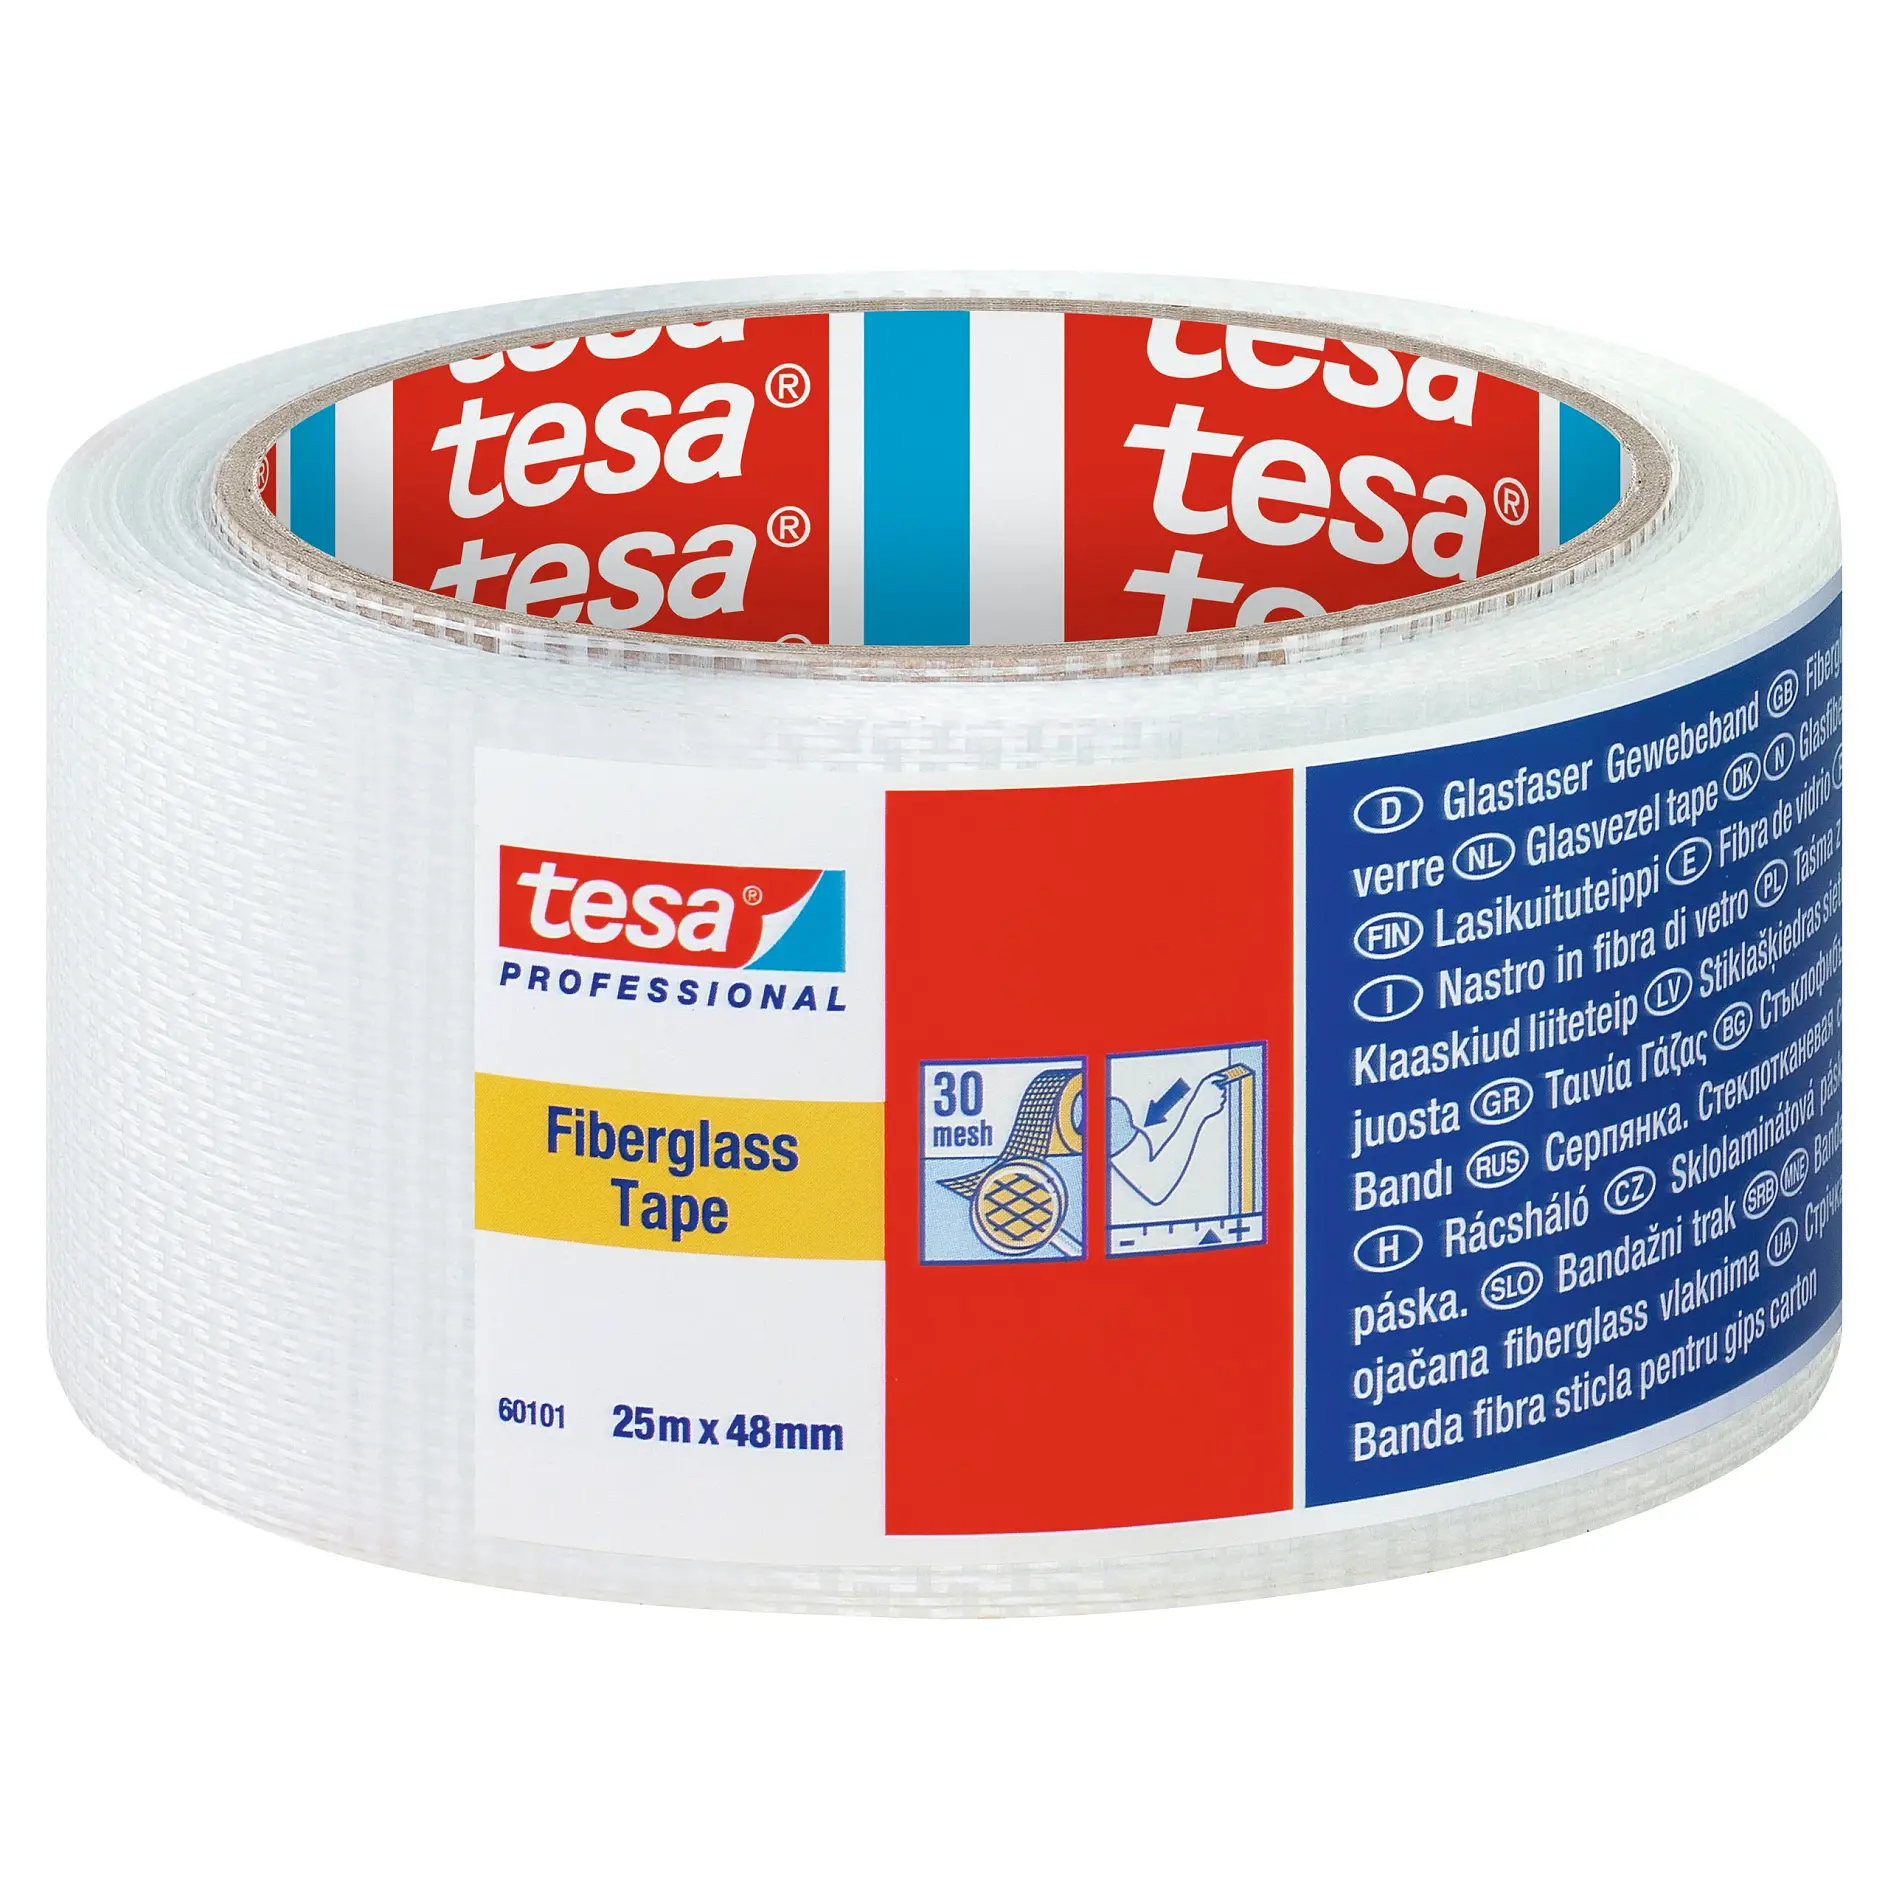 [en-en] tesa Professional Masking fibreglass tape, 25m x 48mm